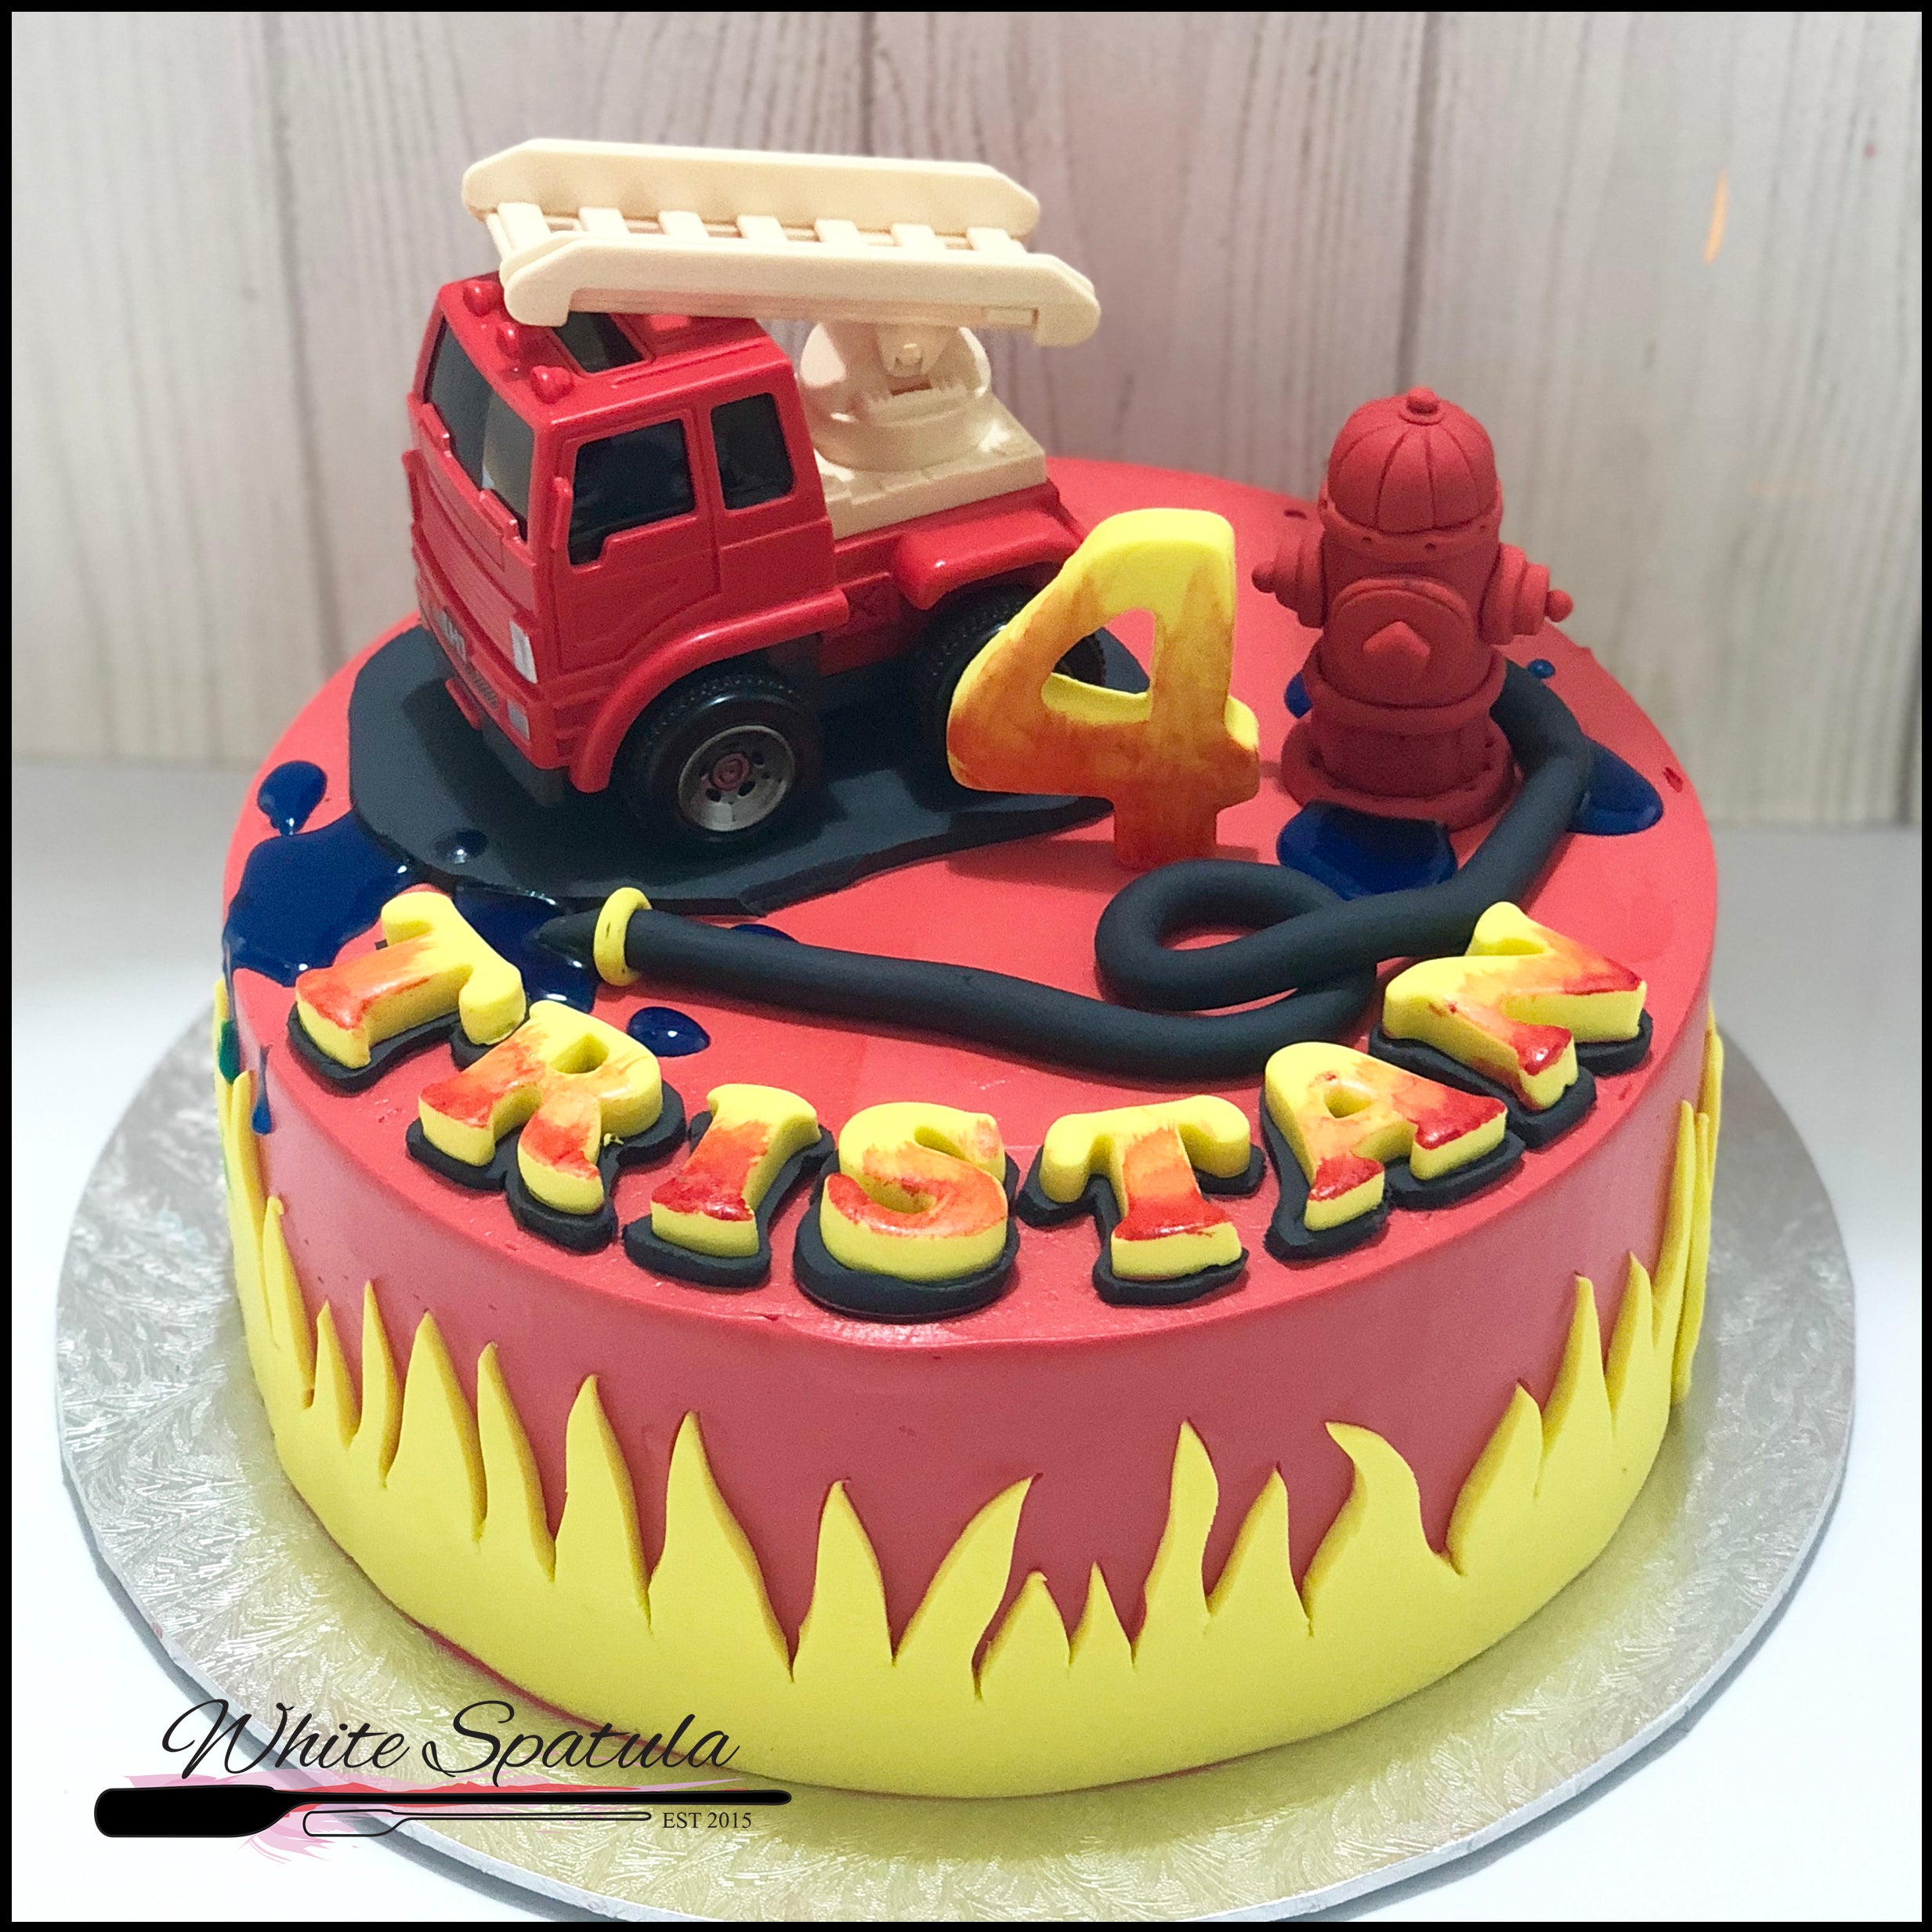 2002 Wilton Fire Truck With Instructions 2105-2061 Aluminum Birthday Cake  Pan | eBay